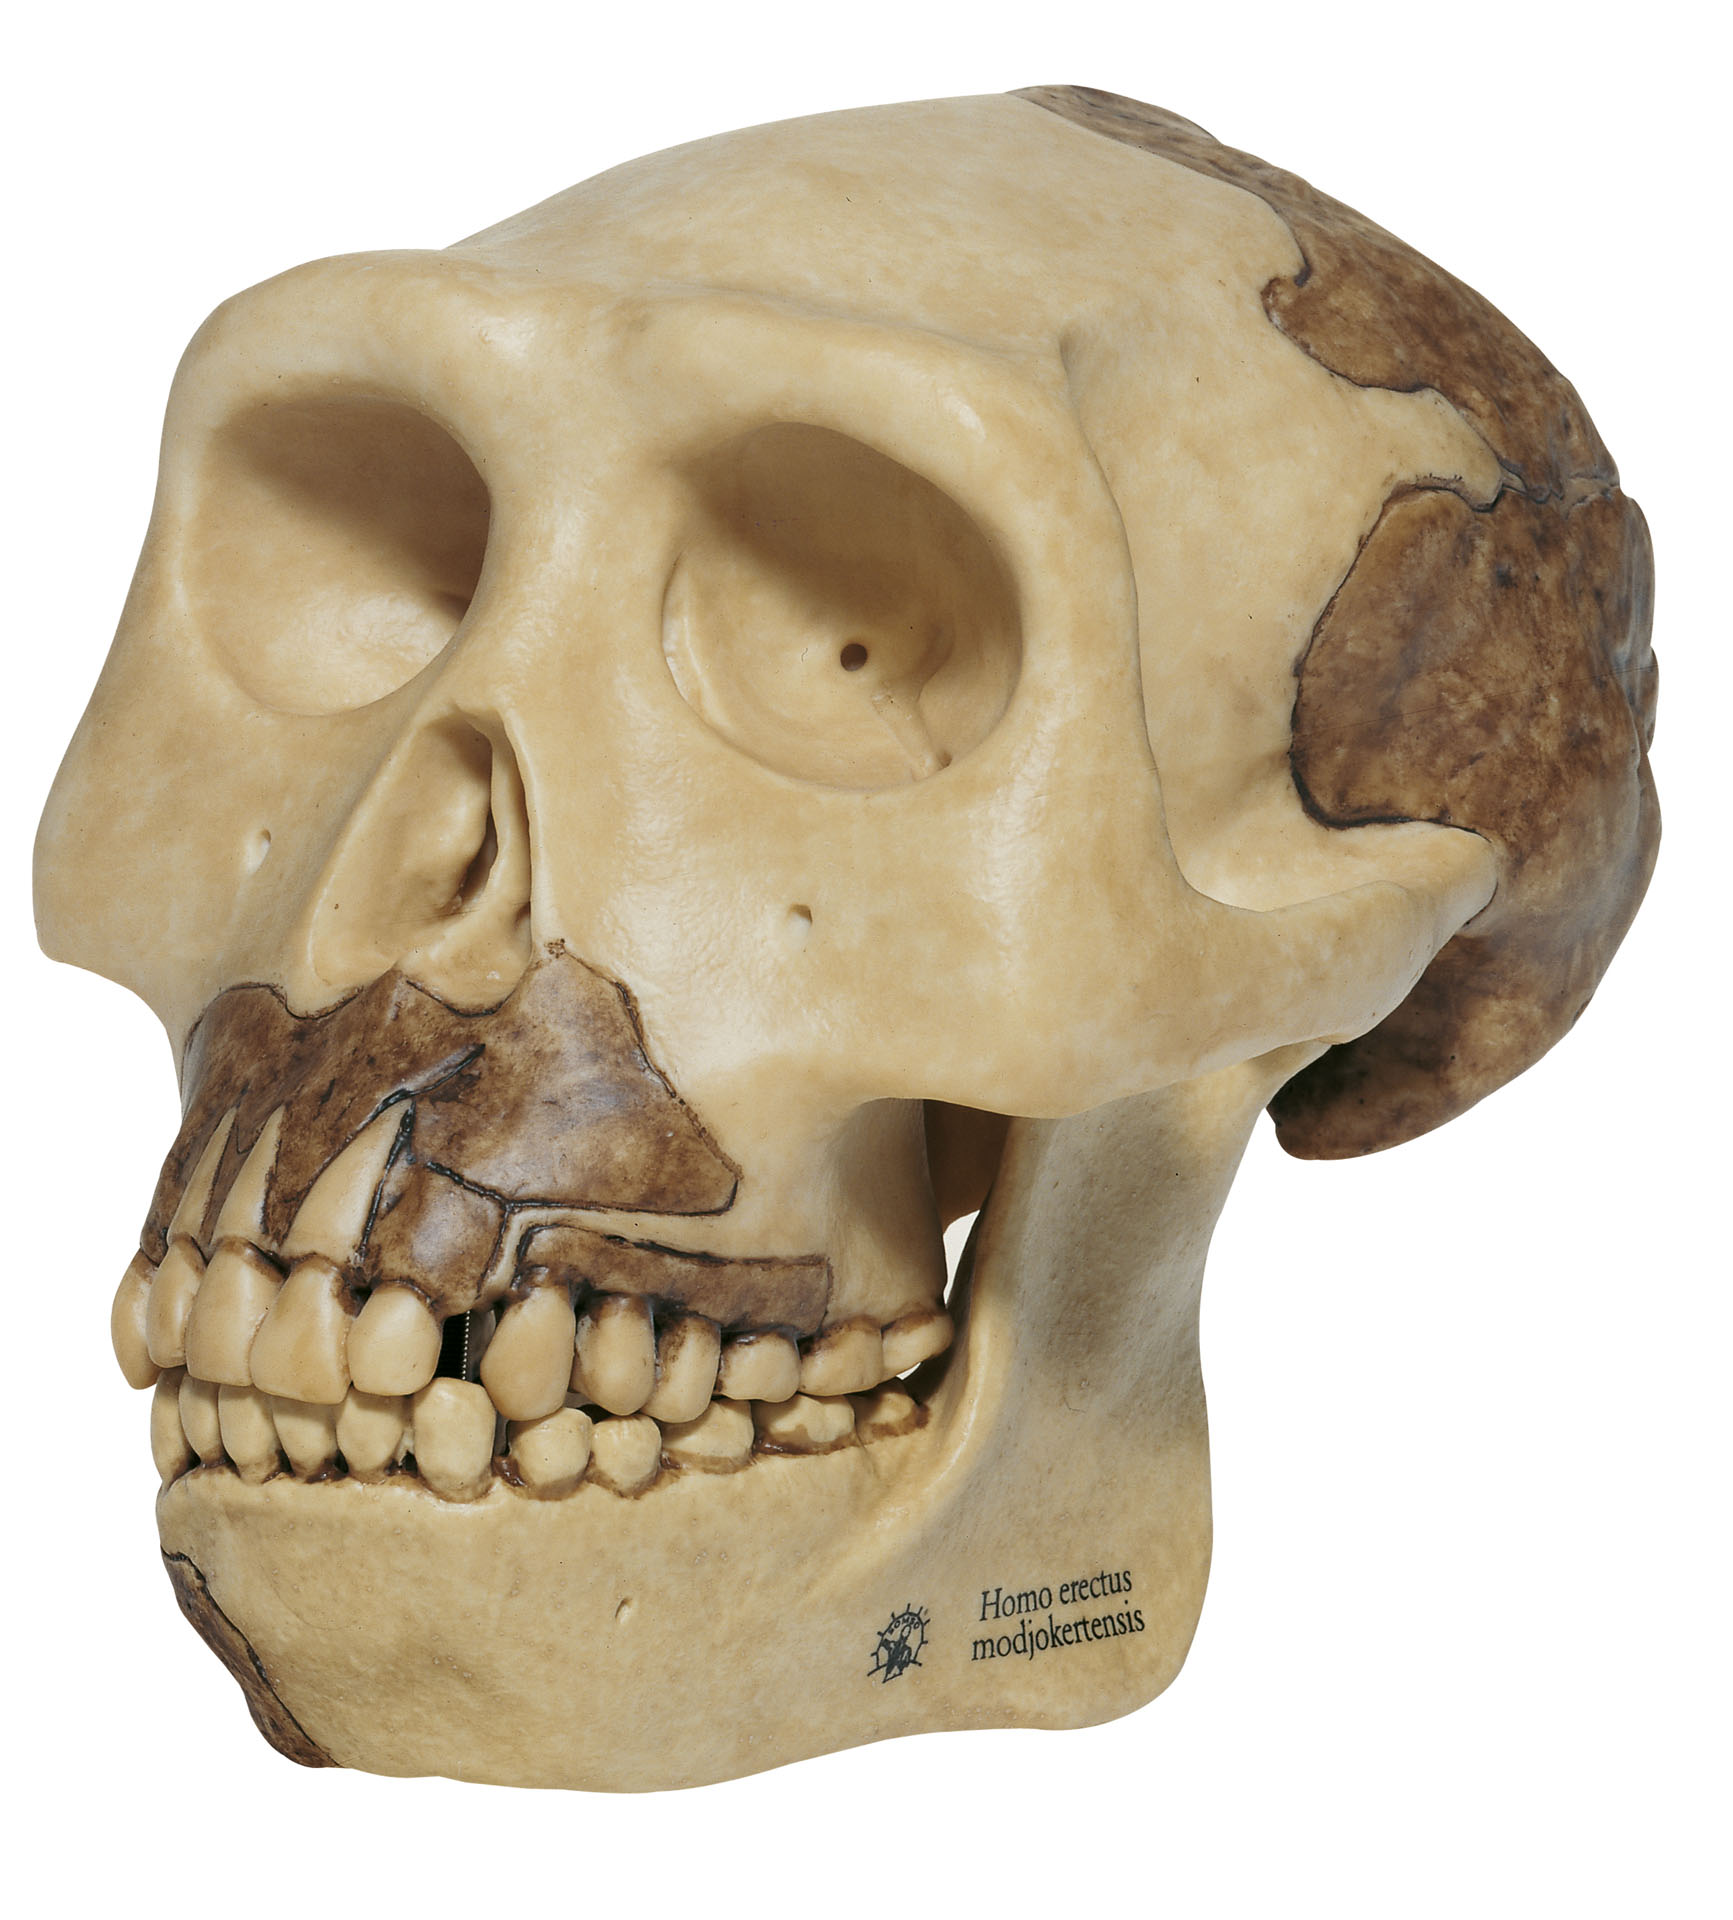 Reconstruction of a Skull of Homo Erectus